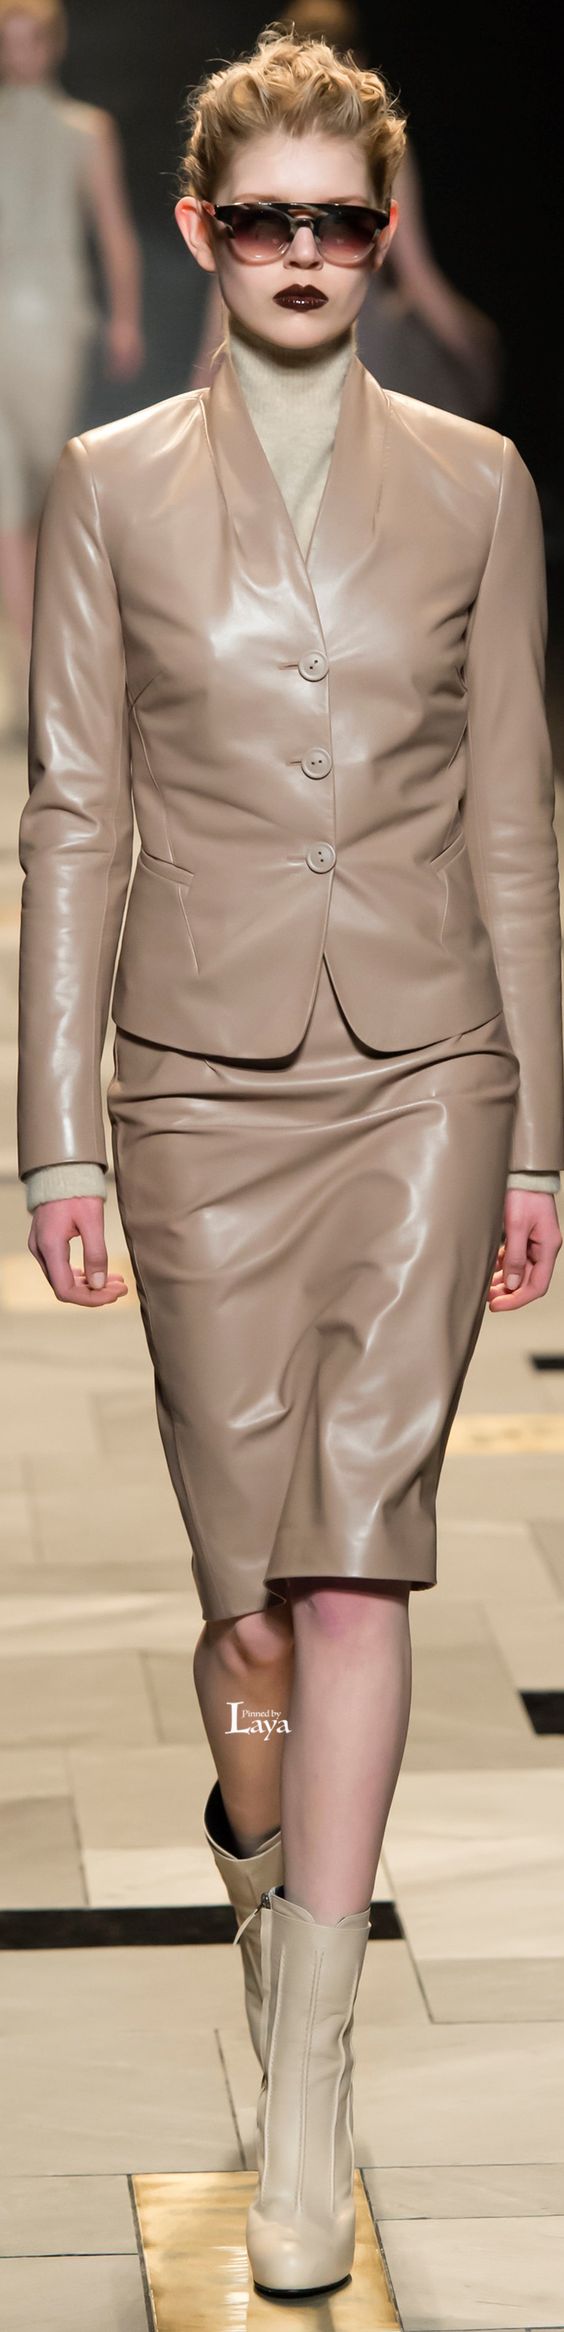 Tan vegan leather skirt and jacket